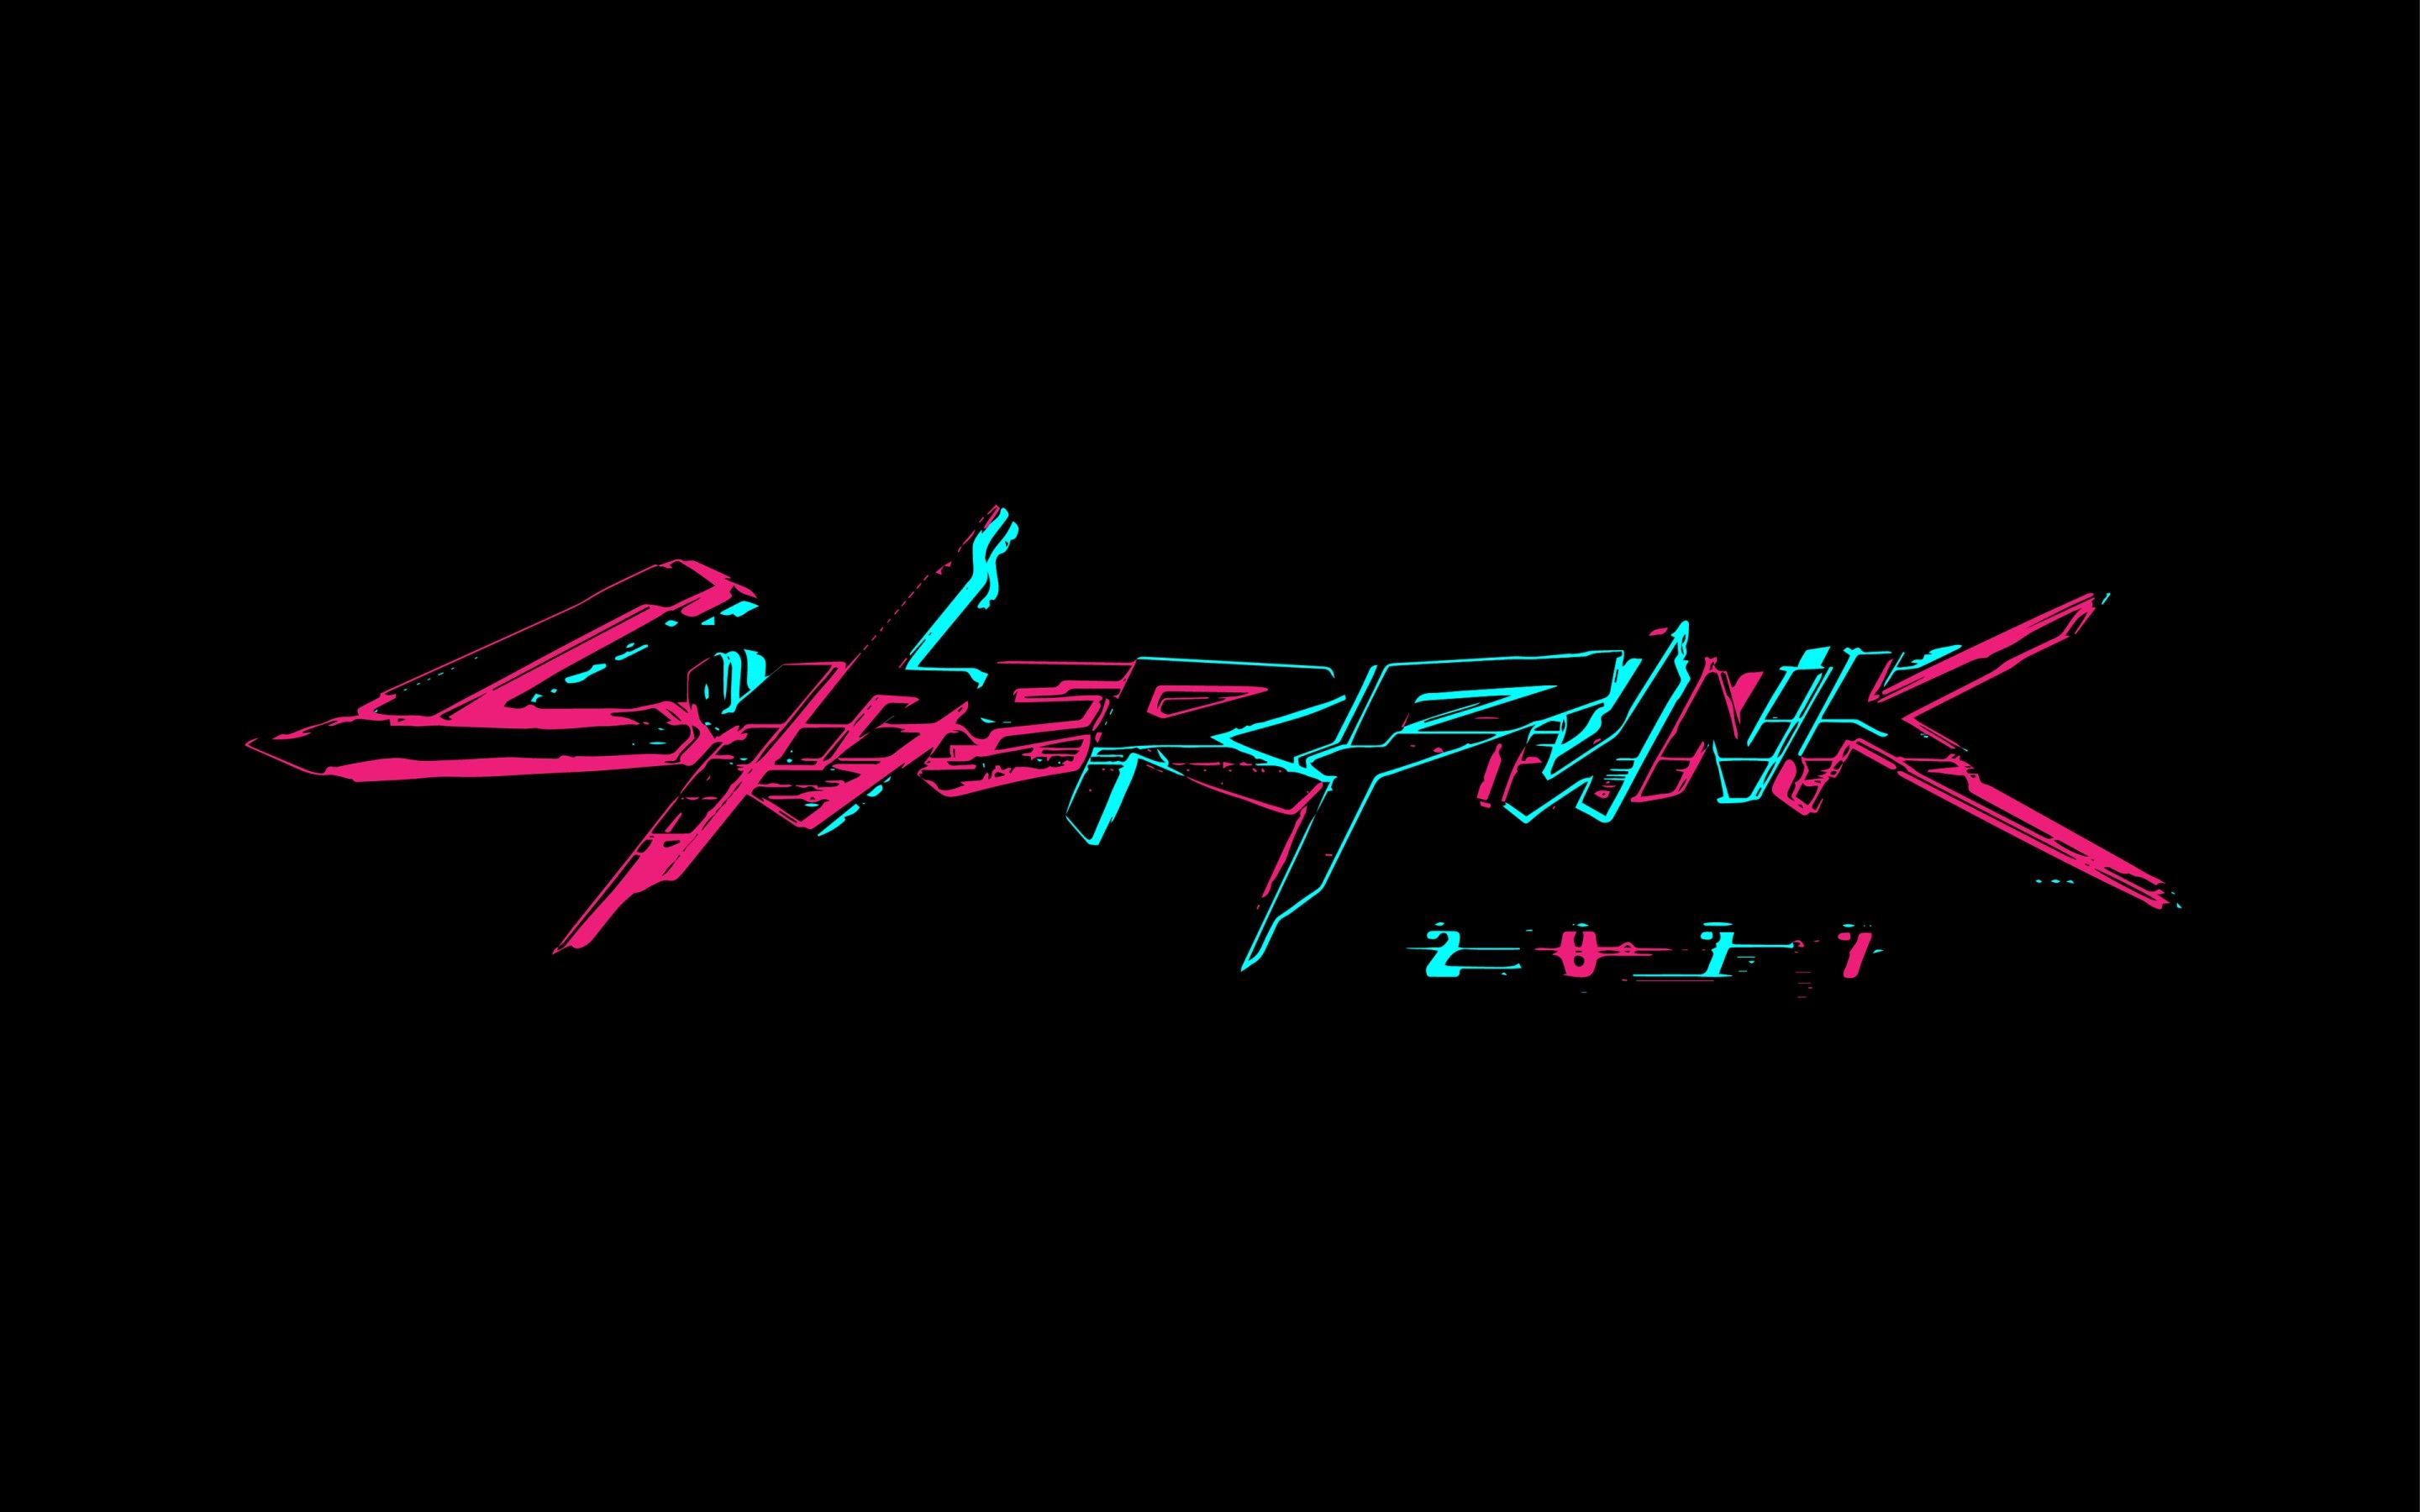 Cyberpunk 2077 4K Wallpaper, Neon, Black Background, PC Games, PlayStation Xbox One, Xbox Series X, Black Dark